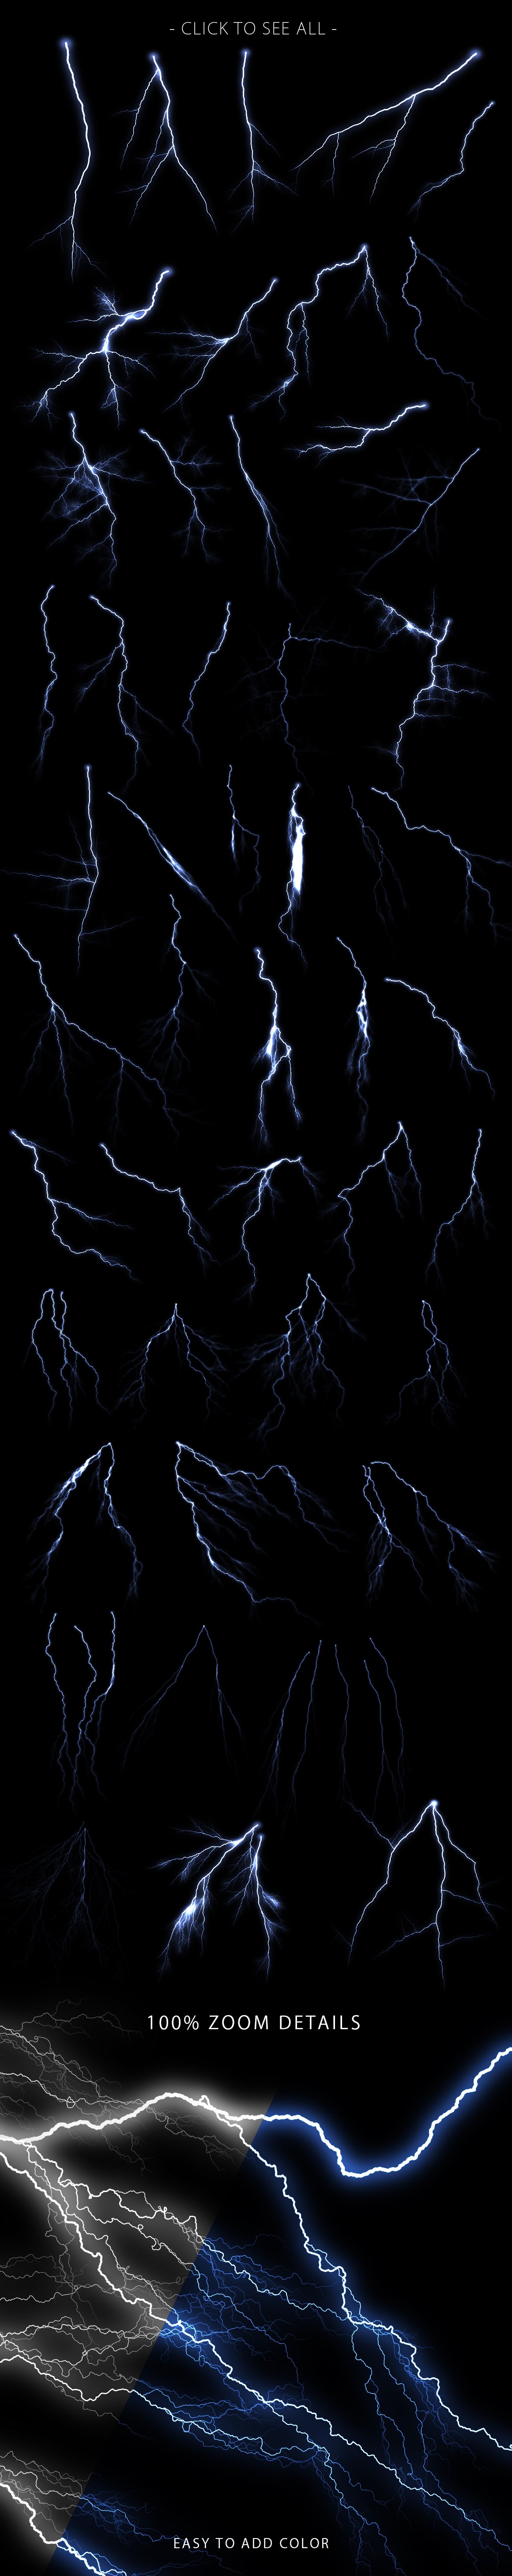 lightning photoshop brushest prev2 179